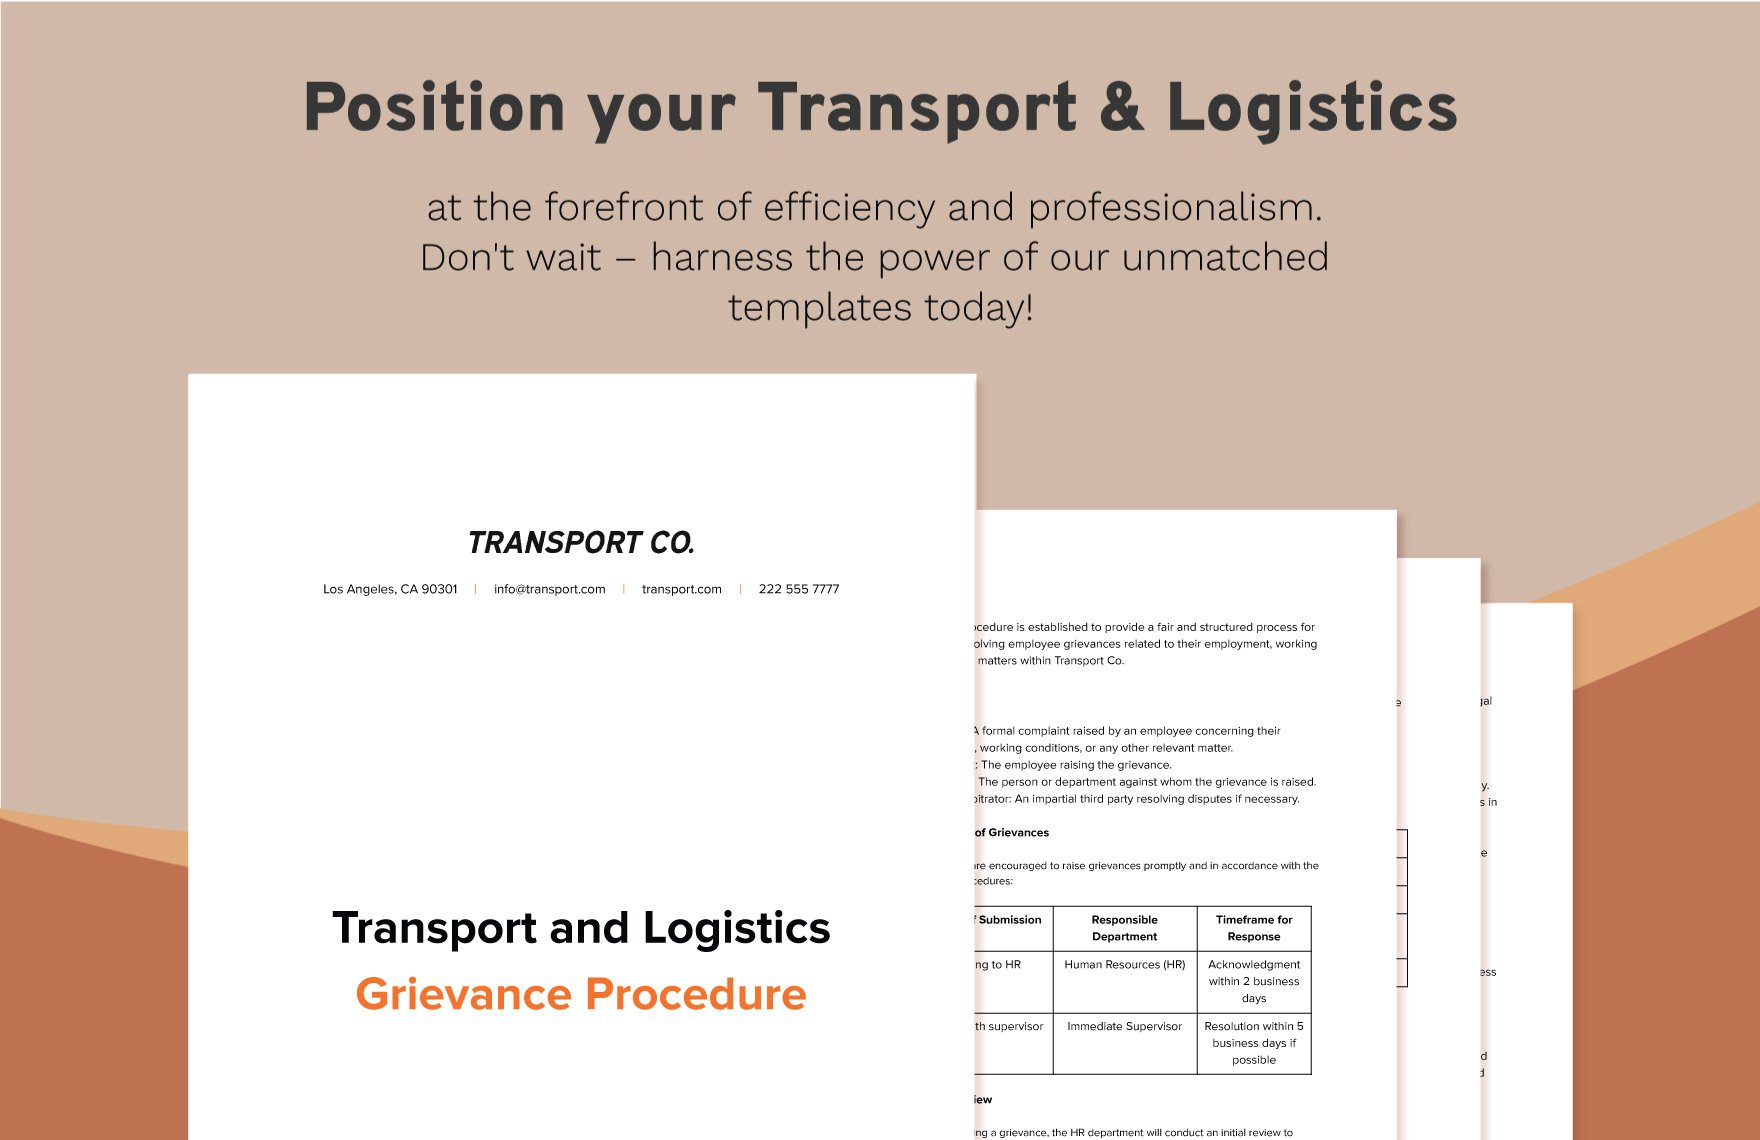 Transport and Logistics Grievance Procedure Template